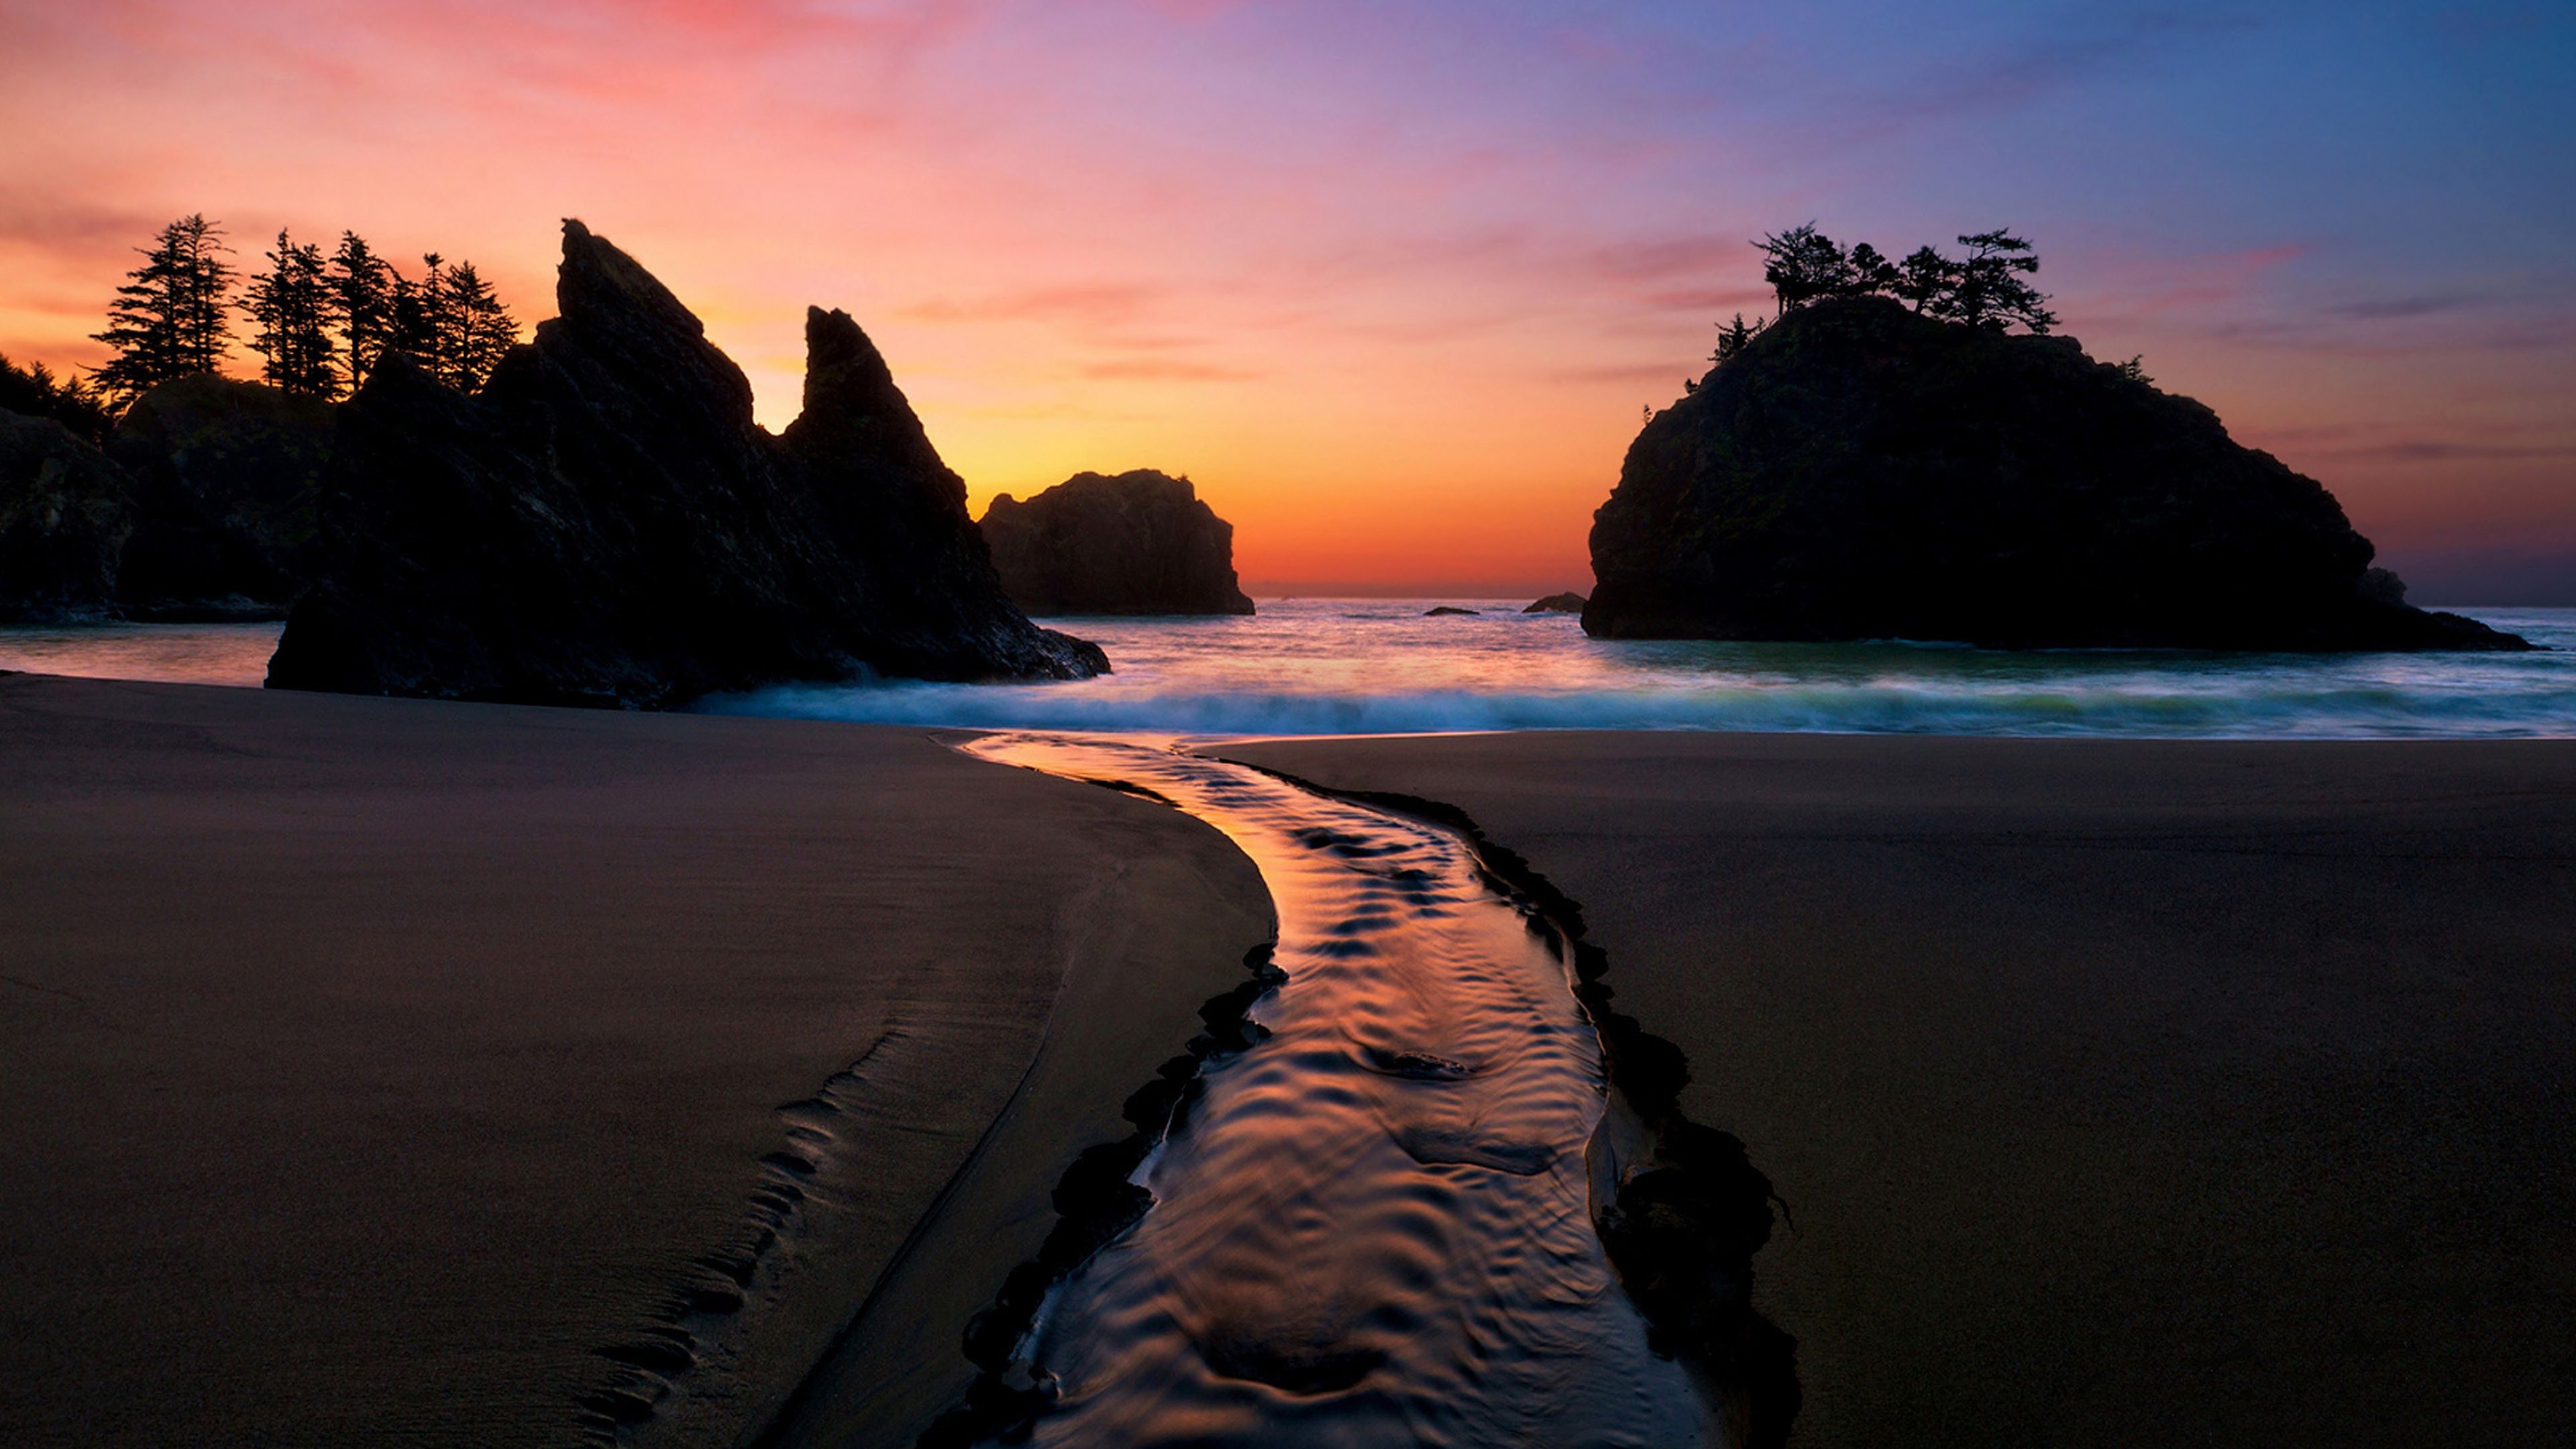 sunset ocean beach 4k Ultra HD Wallpaper and Background Image